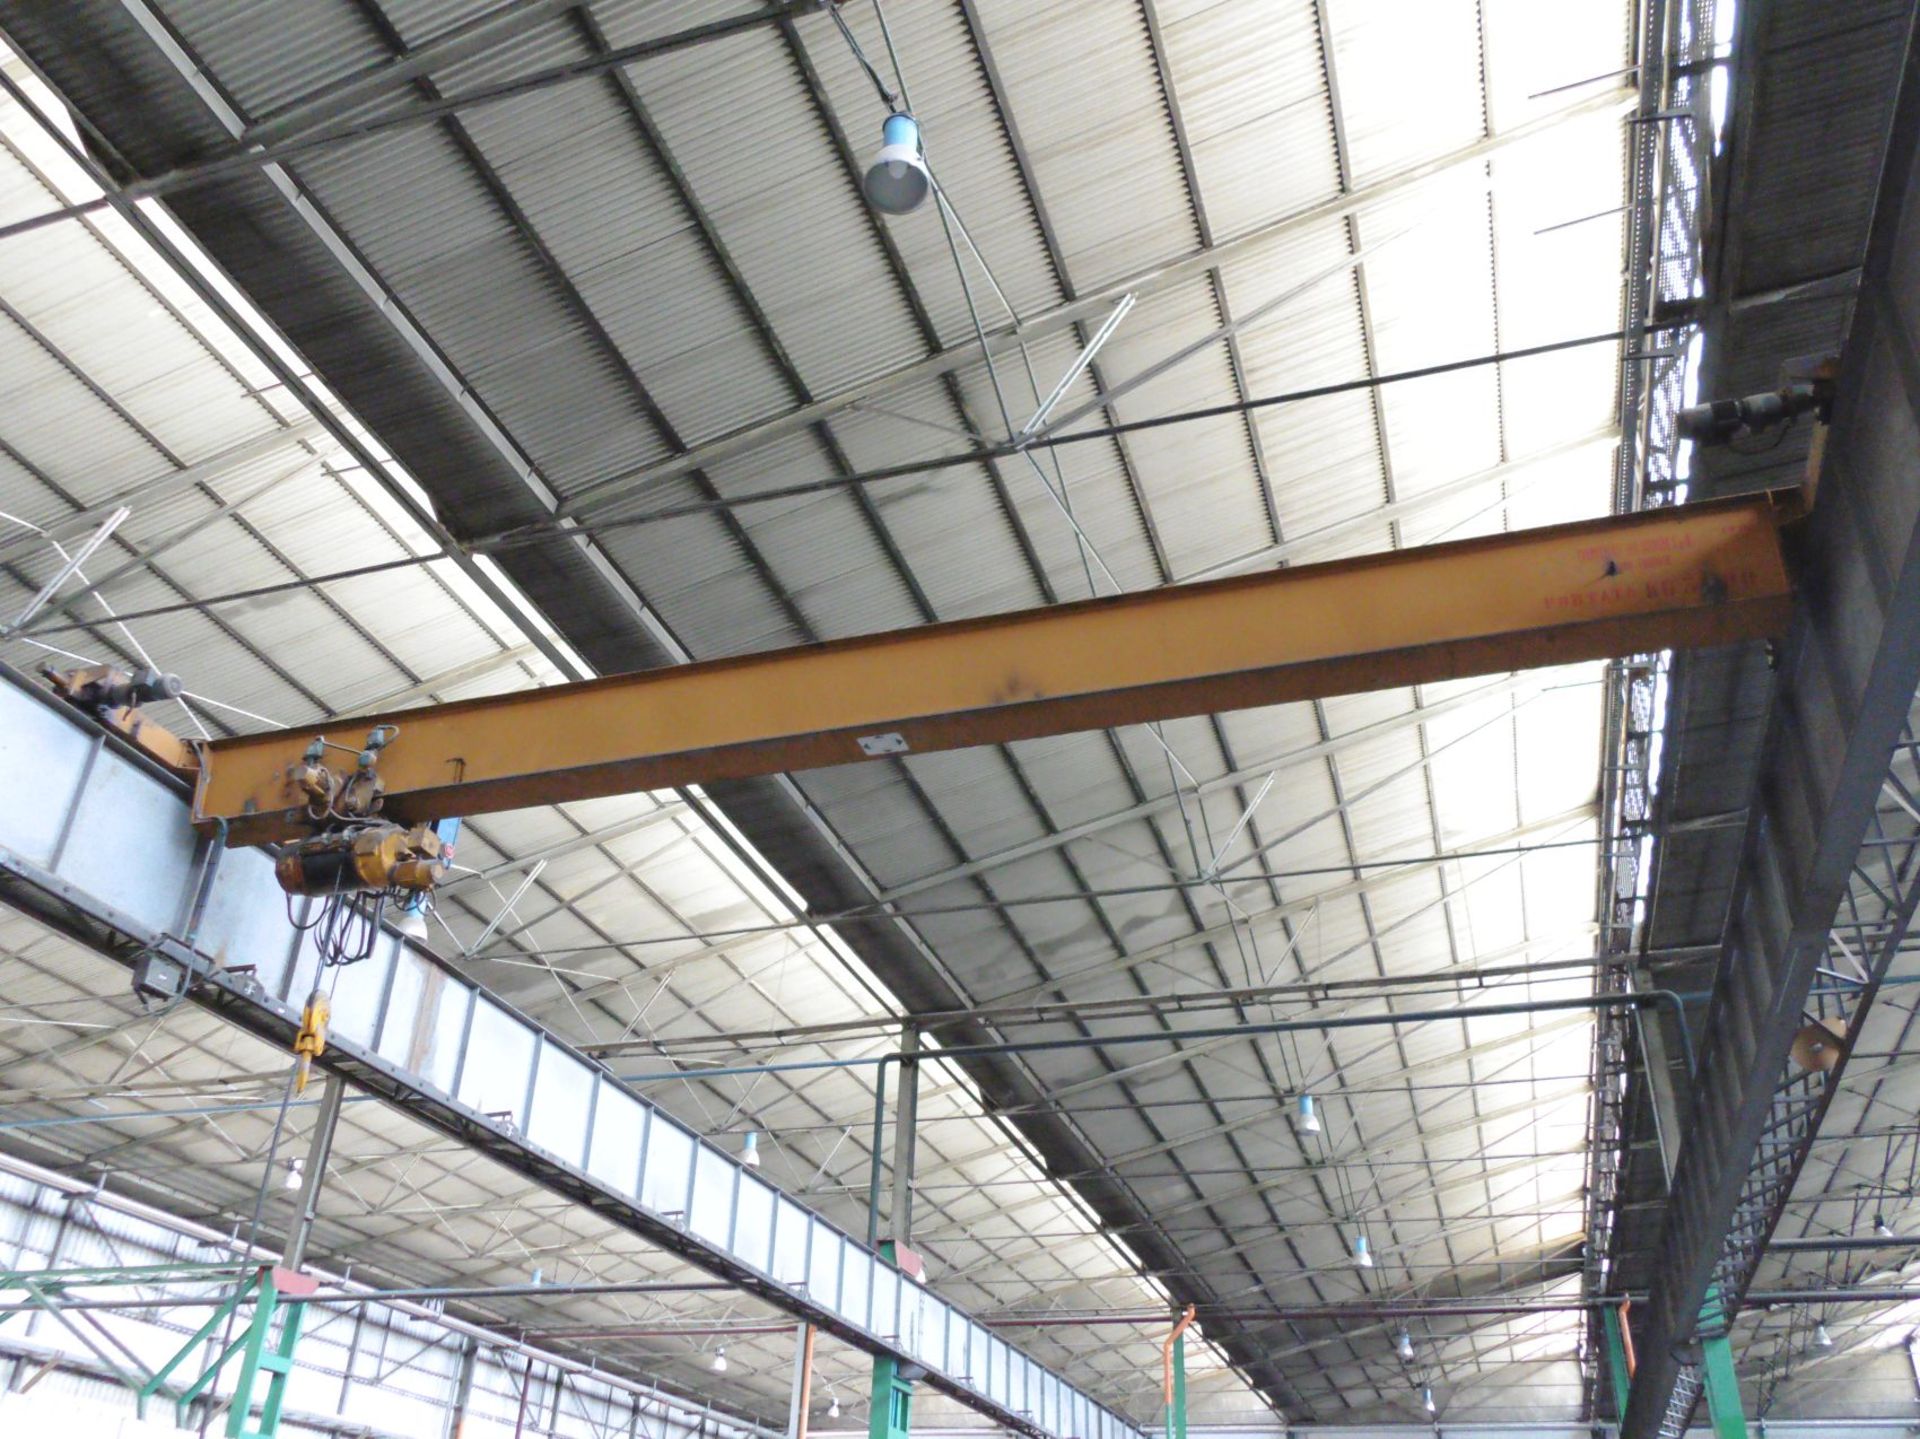 3 Tonne Single Beam Overhead Travelling Gantry Crane with Pendant Control; span 9.5m - Image 2 of 3